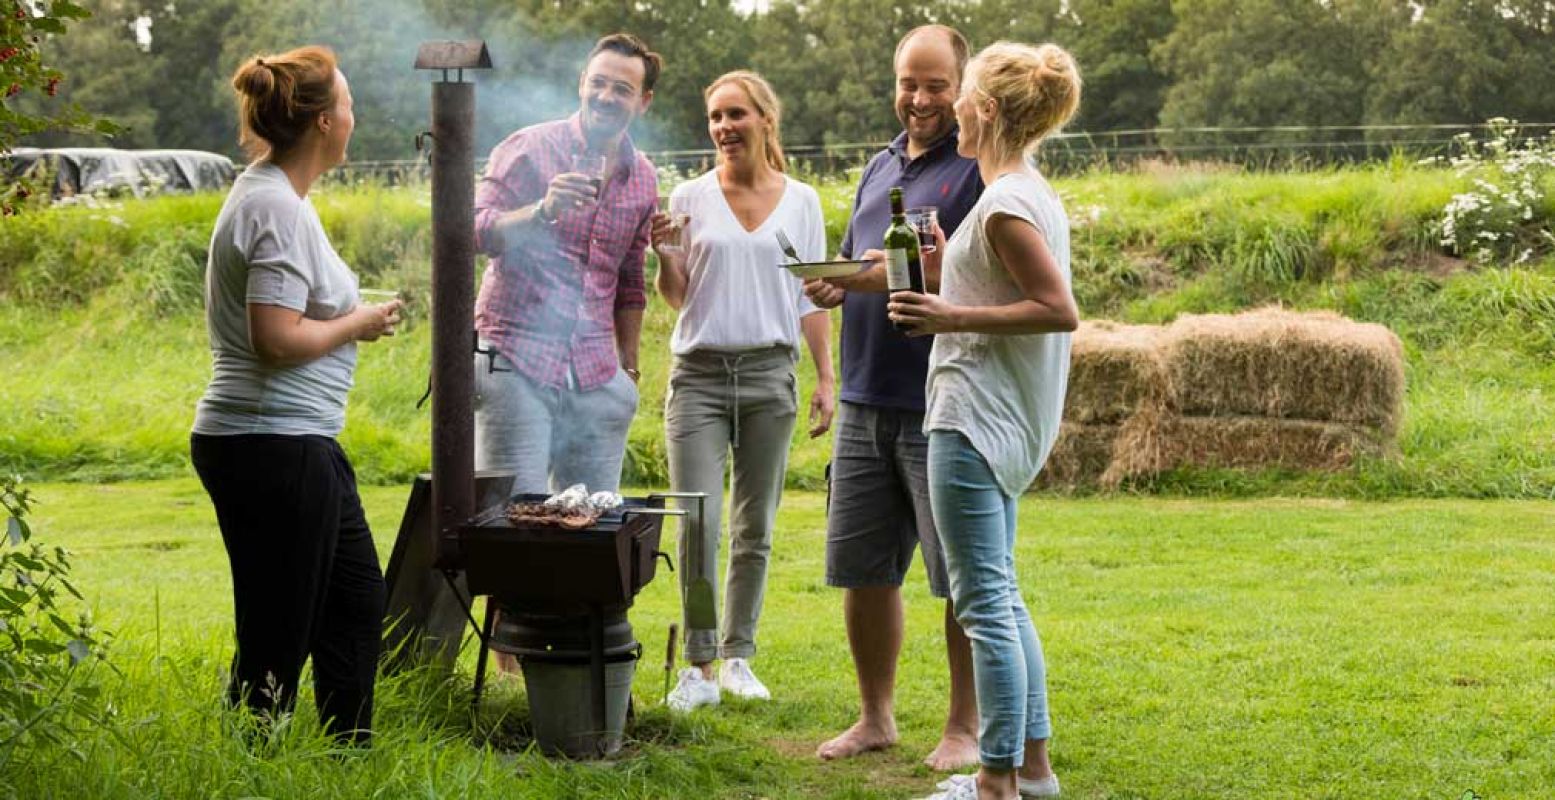 Gezellig barbecueën met vrienden of familie! Foto: © Otto Kalkhoven 2016, All rights reserved.